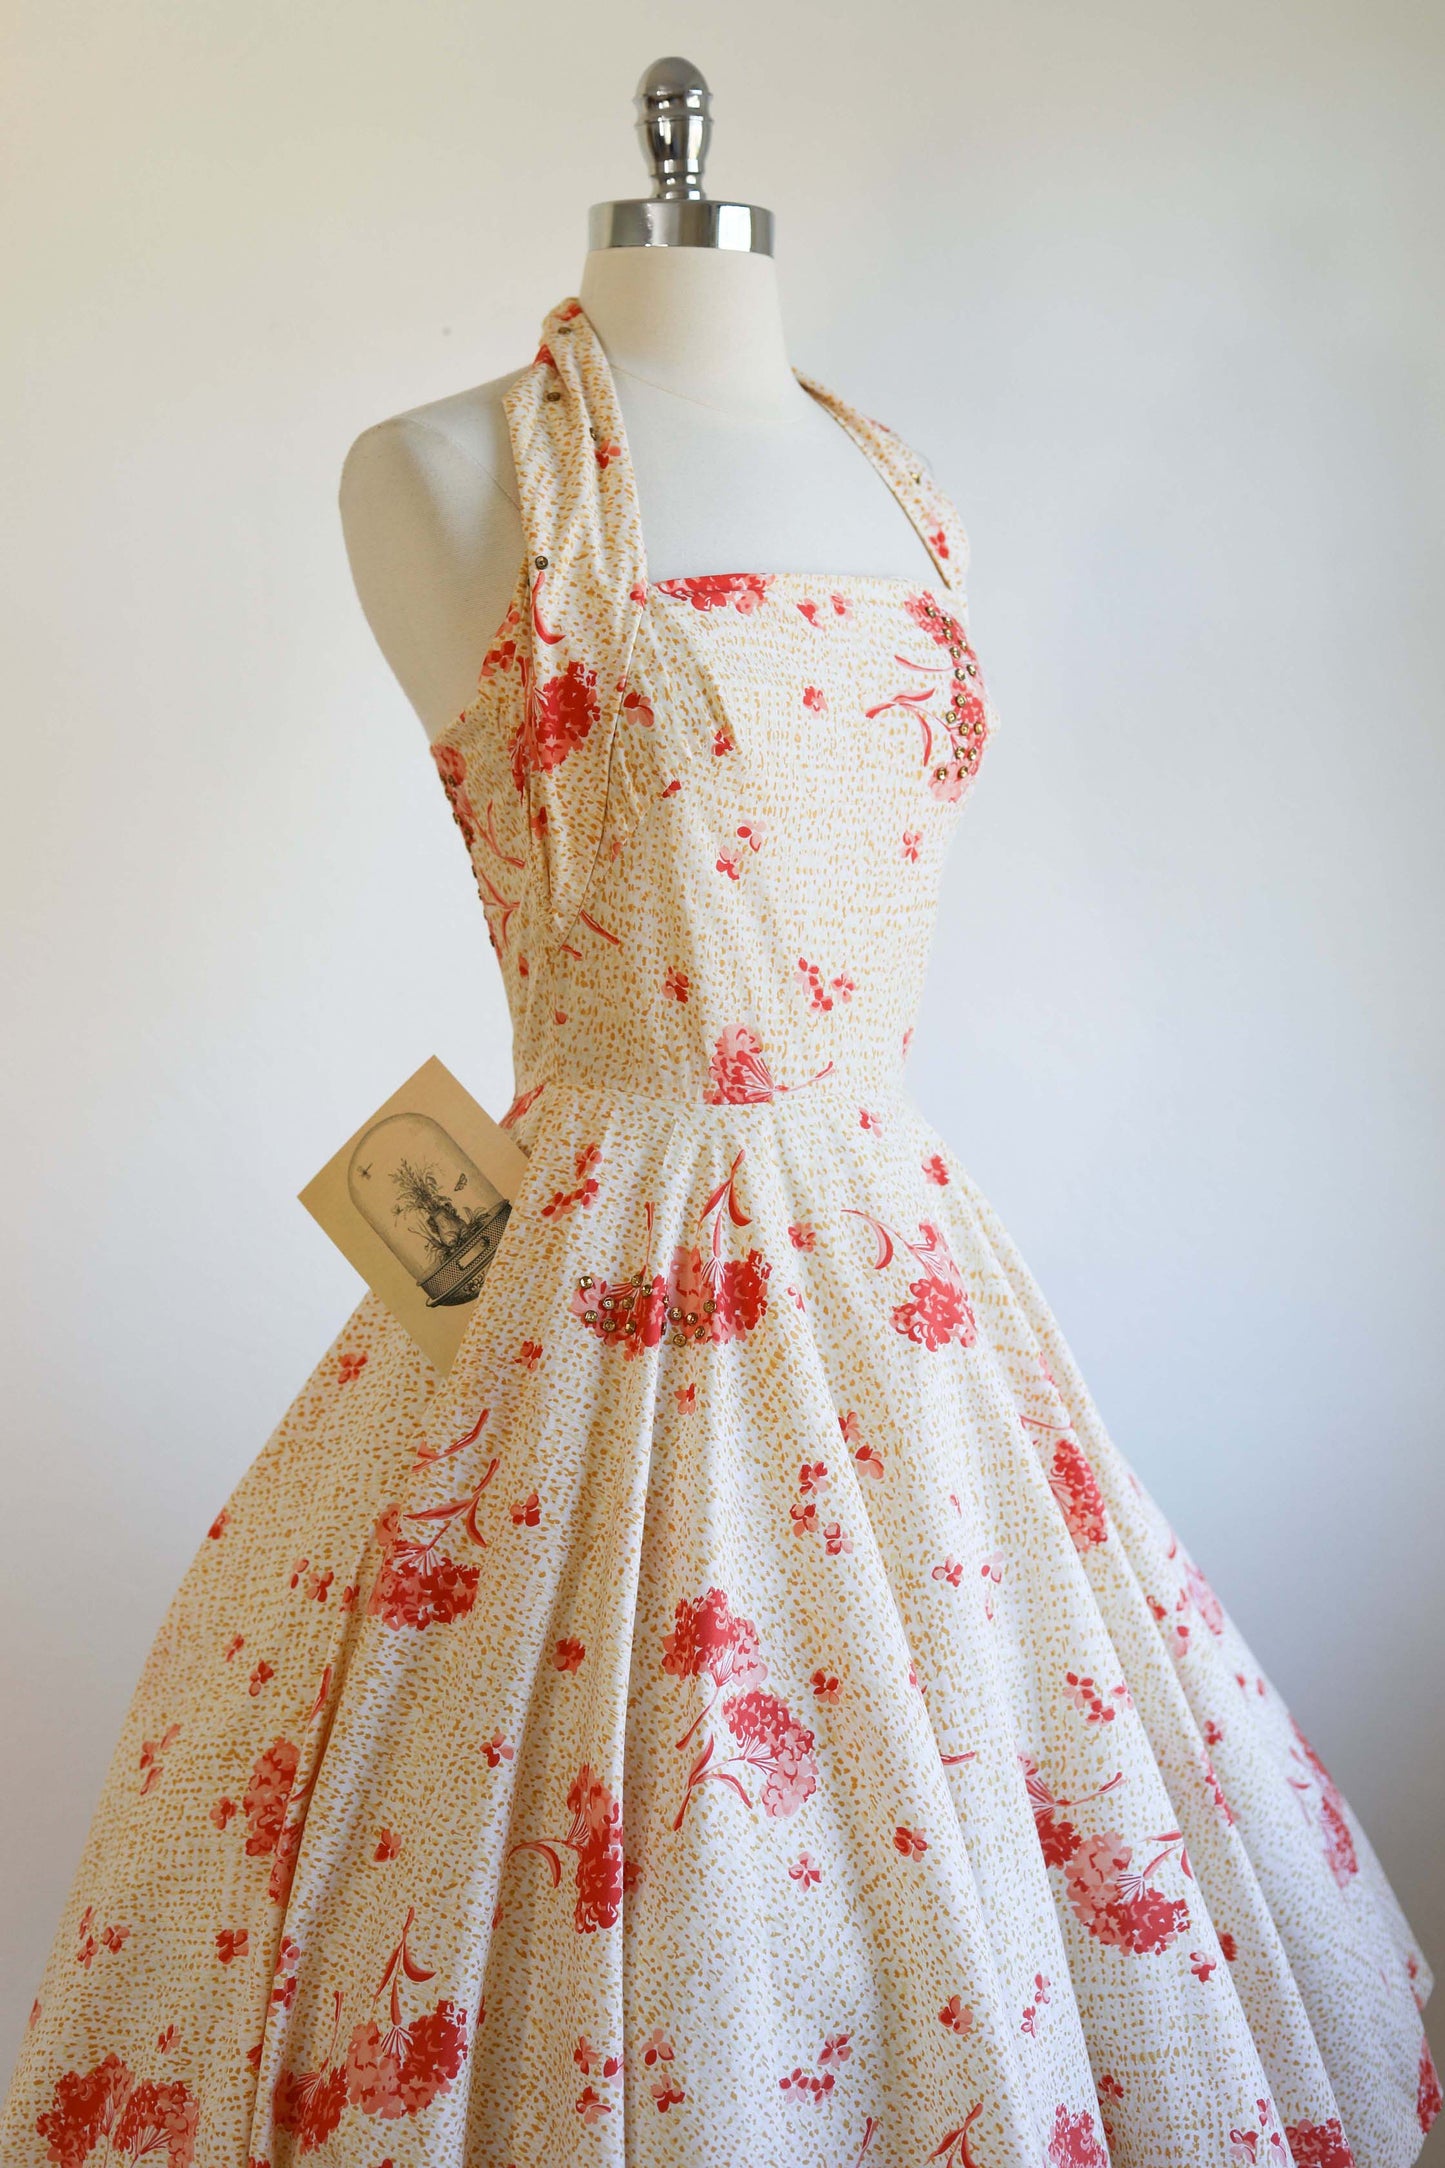 Vintage 1950s Dress - SUPERB Peach + Coral Floral Print Jerry Gilden Halter Sundress w Metal Studs Size XS